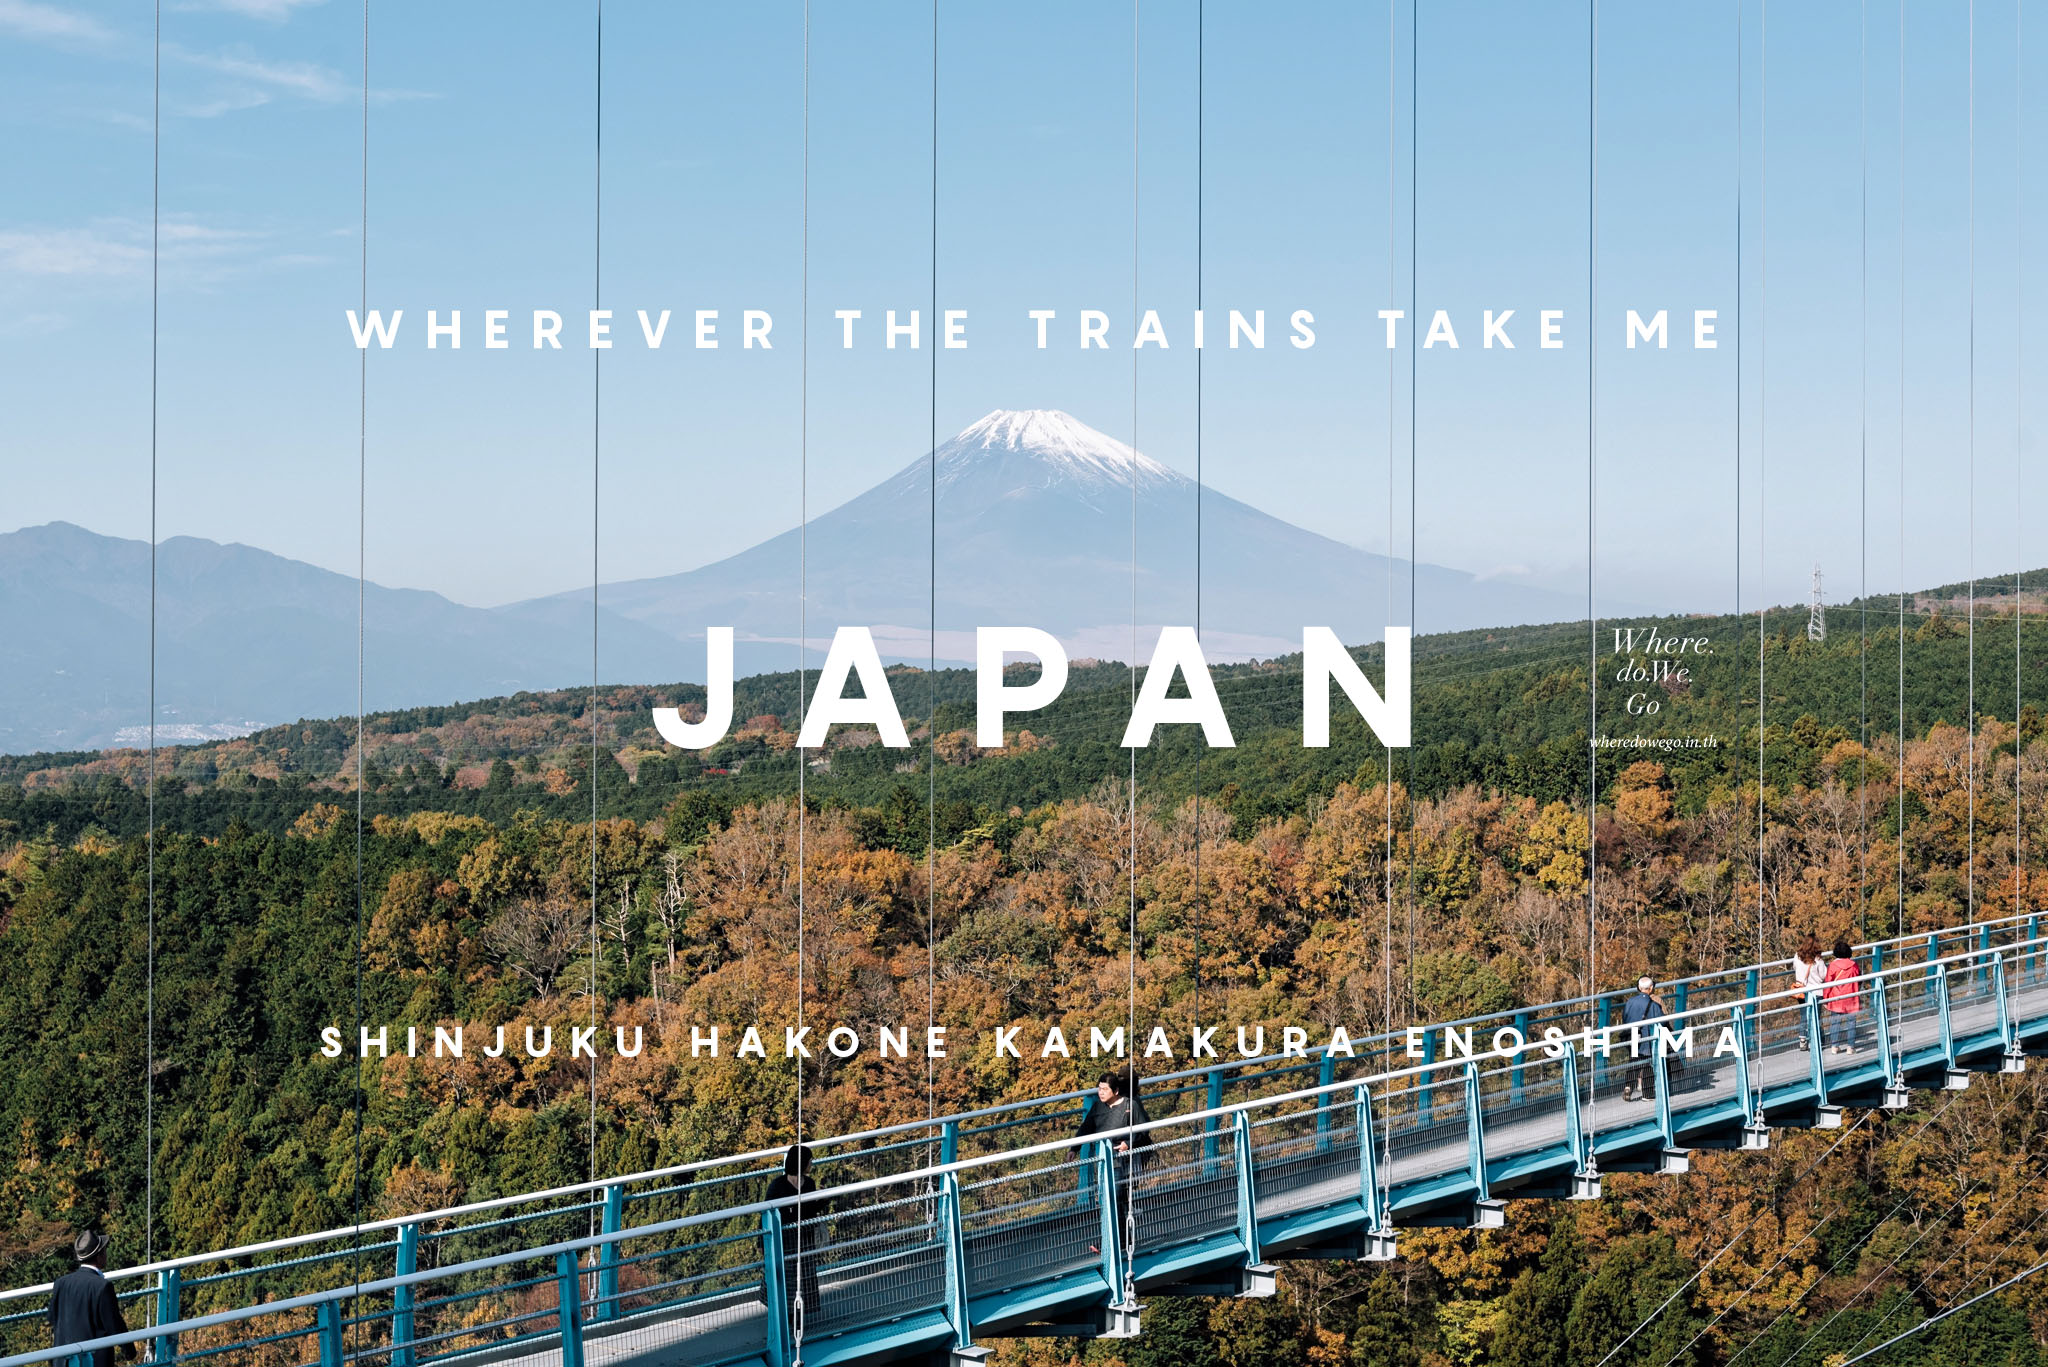 Wherever the trains take me, JAPAN